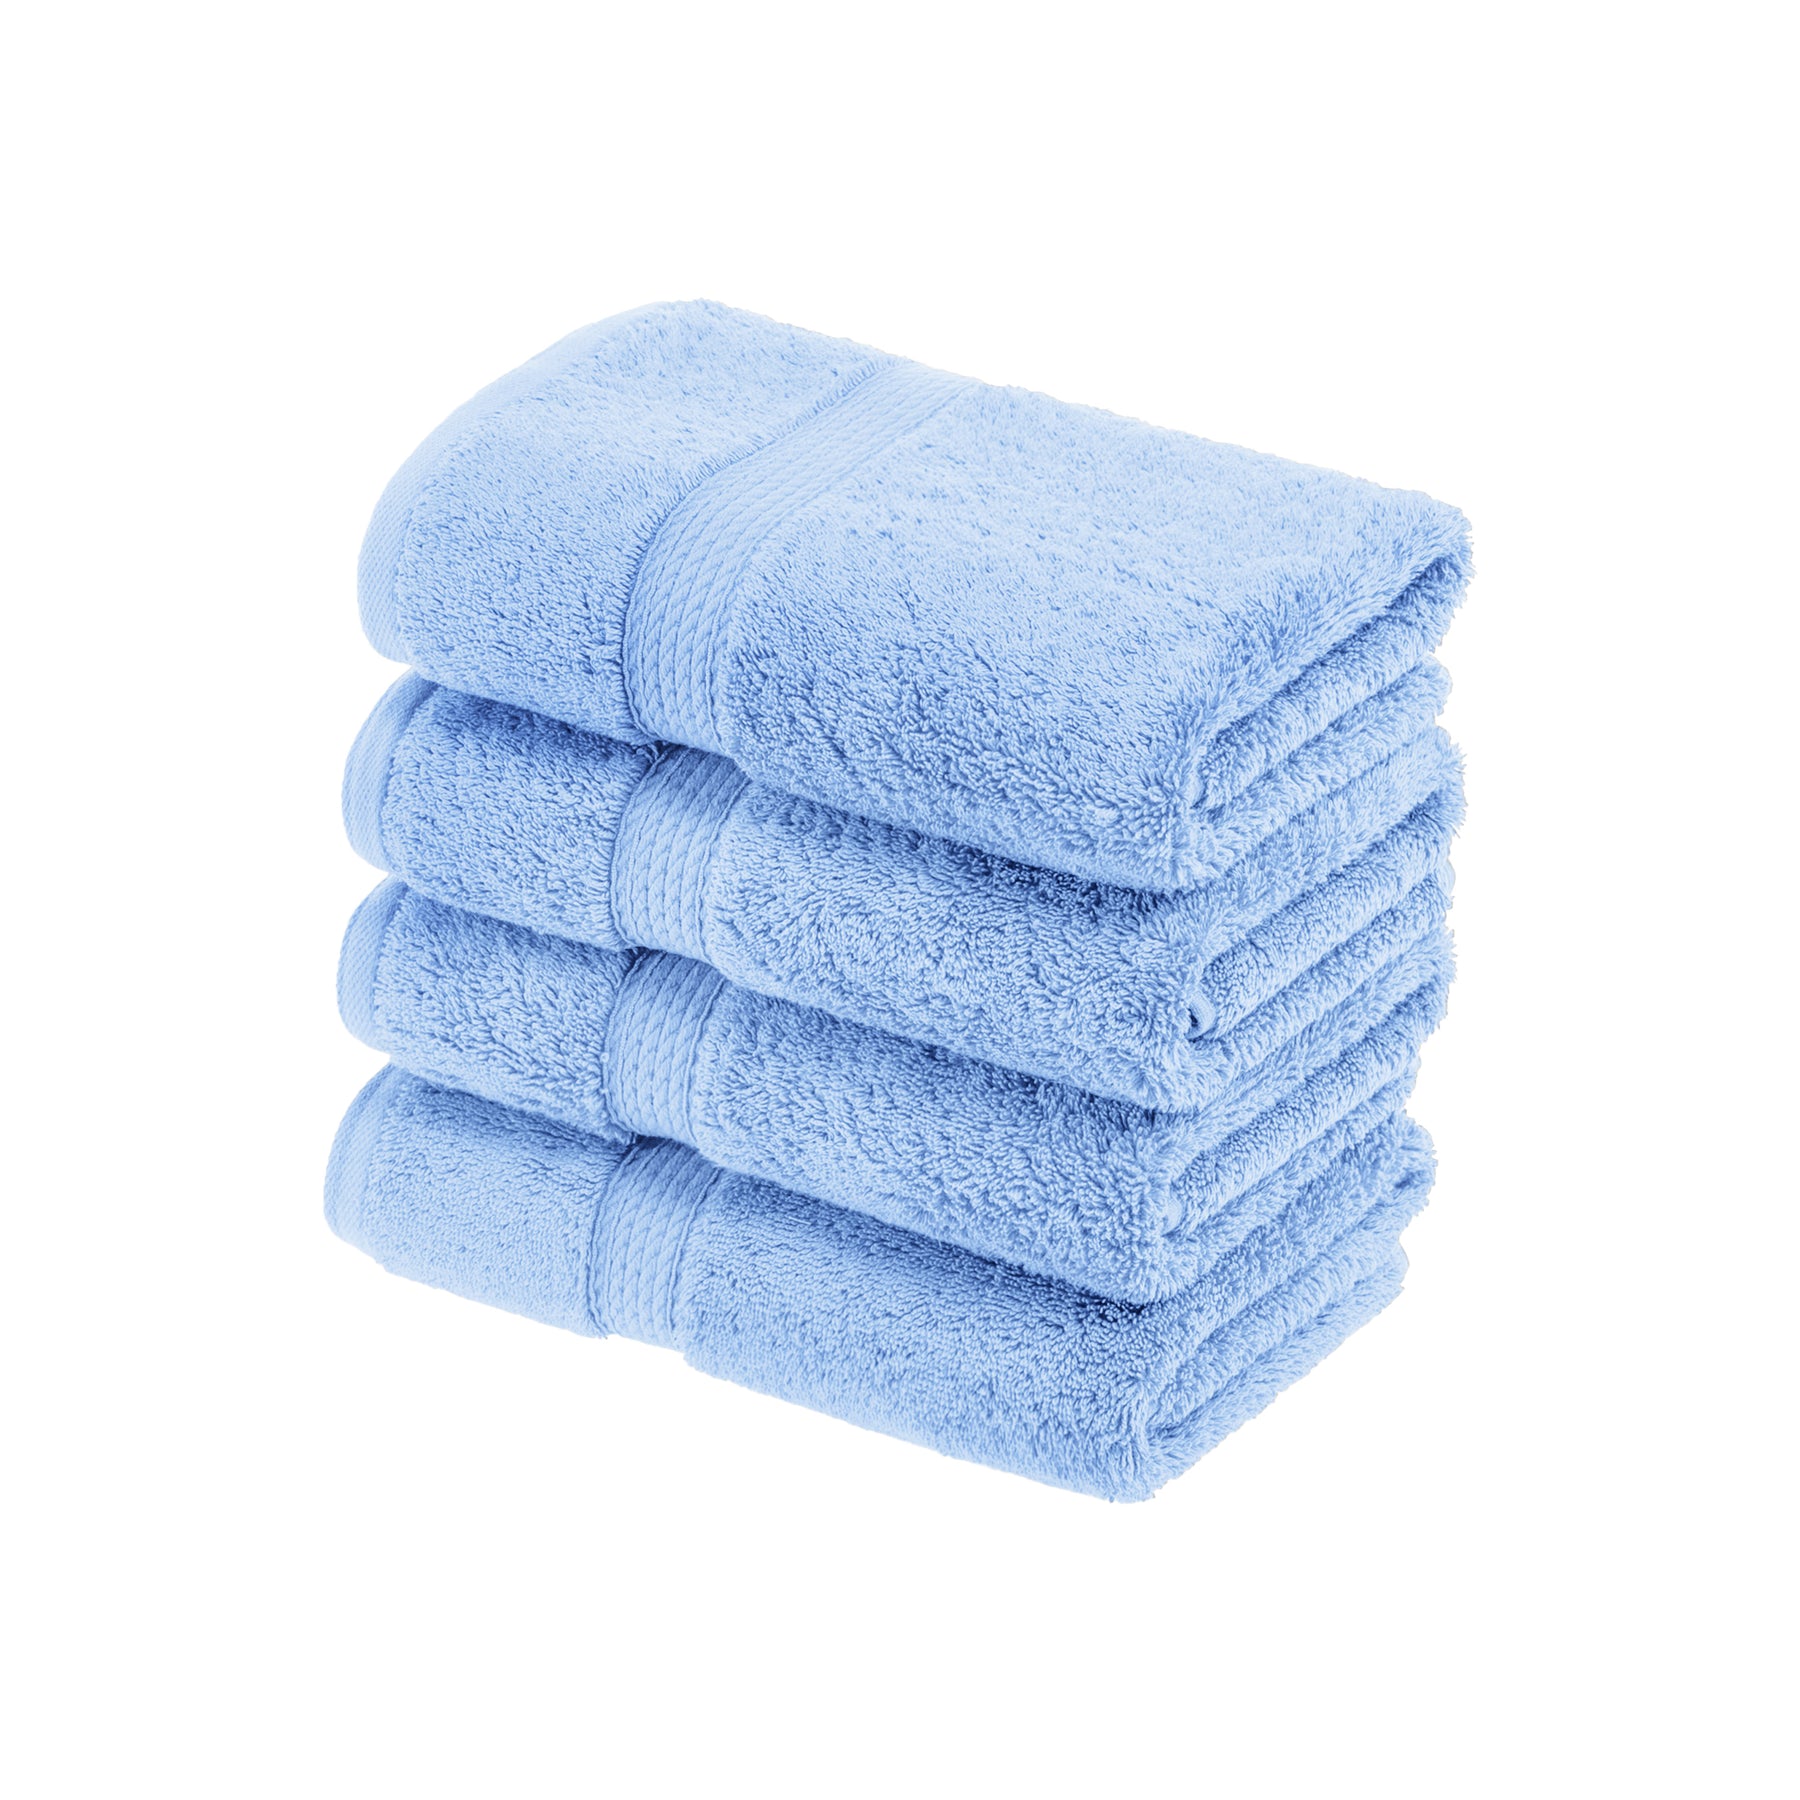 Solid Egyptian Cotton 4 Piece Hand Towel Set - Light Blue